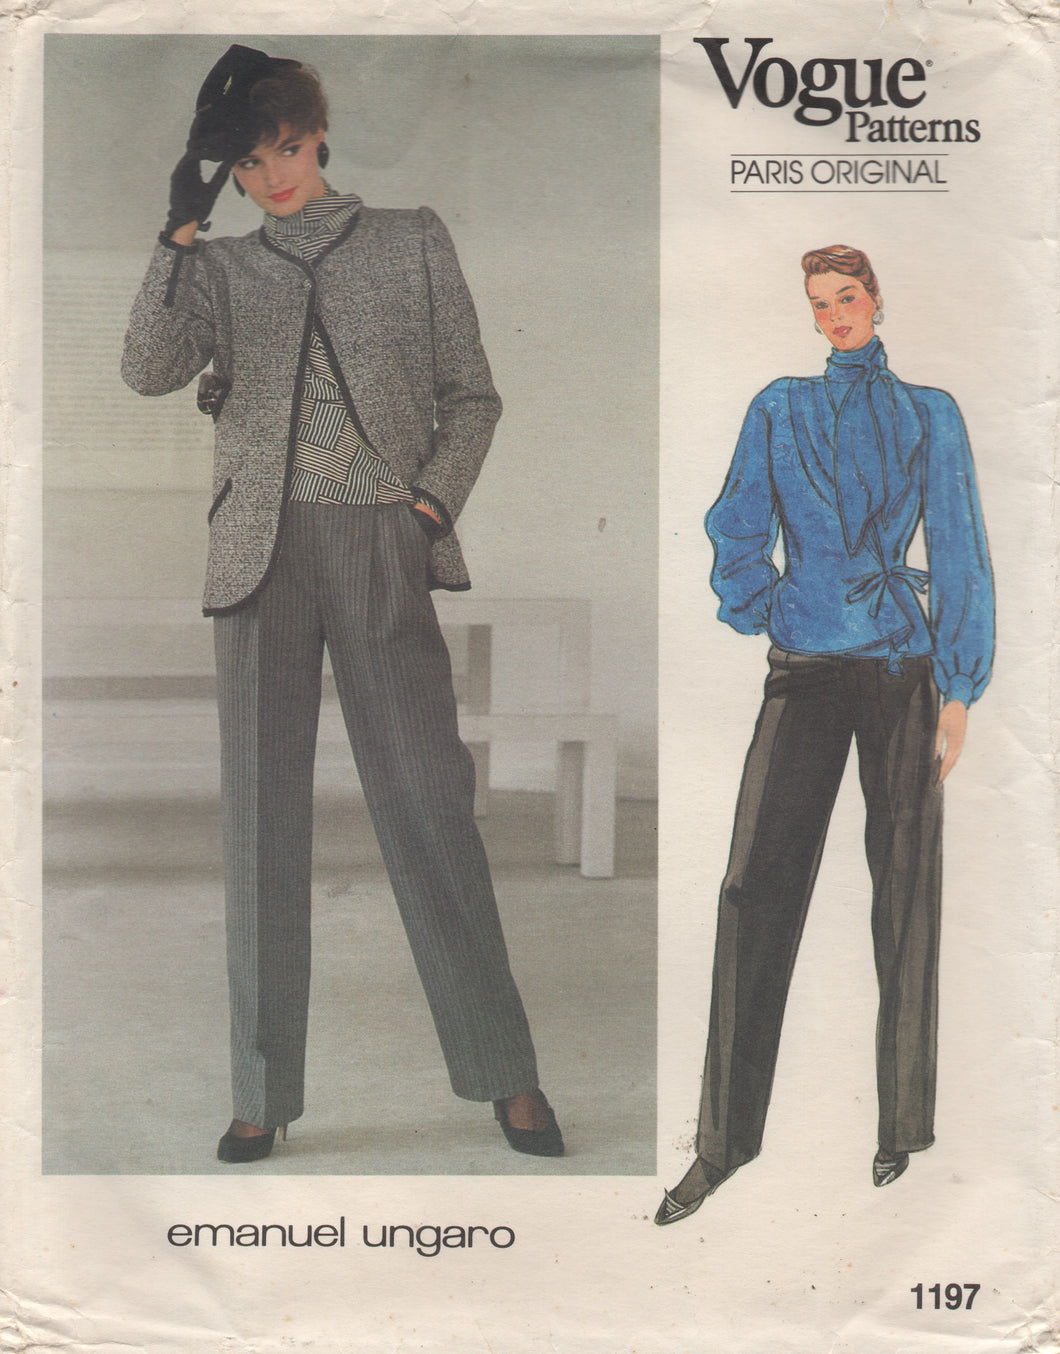 1980's Vogue Paris Original Wrap Blouse with Bow detail, Jacket and High Waisted Pants Pattern - Emanuel Ungaro - Bust 34